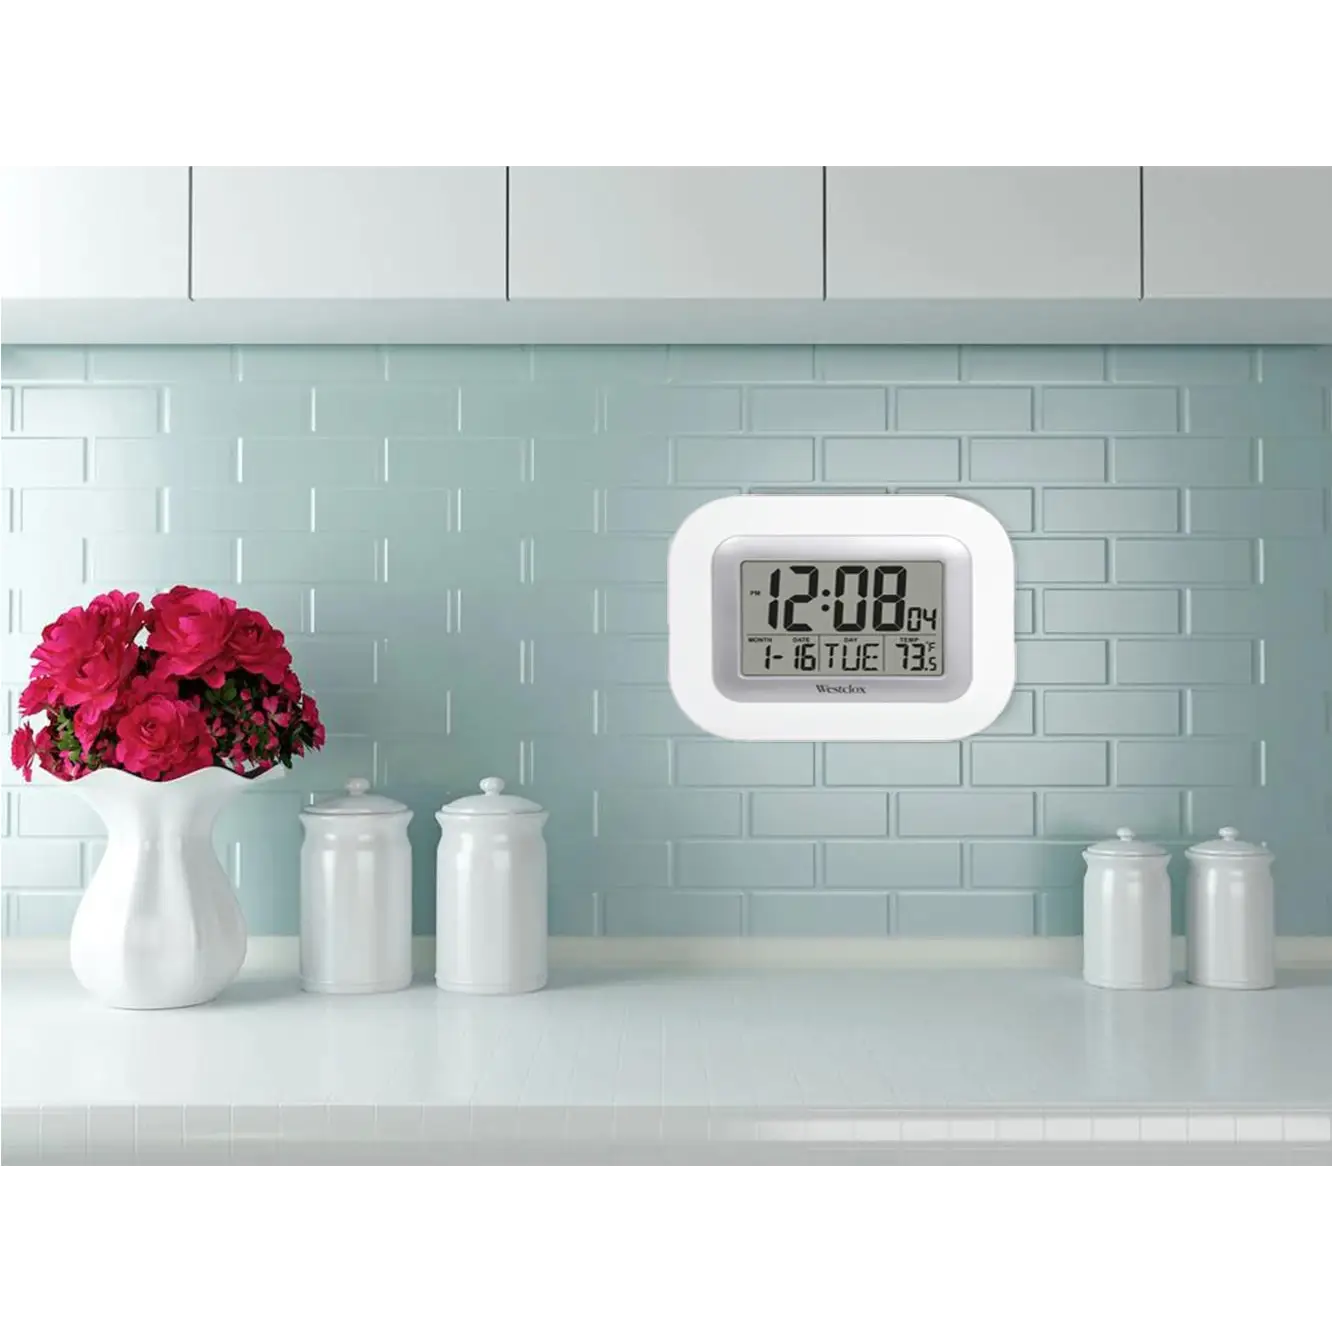 Westclox Desk Mantel/Wall Clock Alarm Clock (White) 55006S -